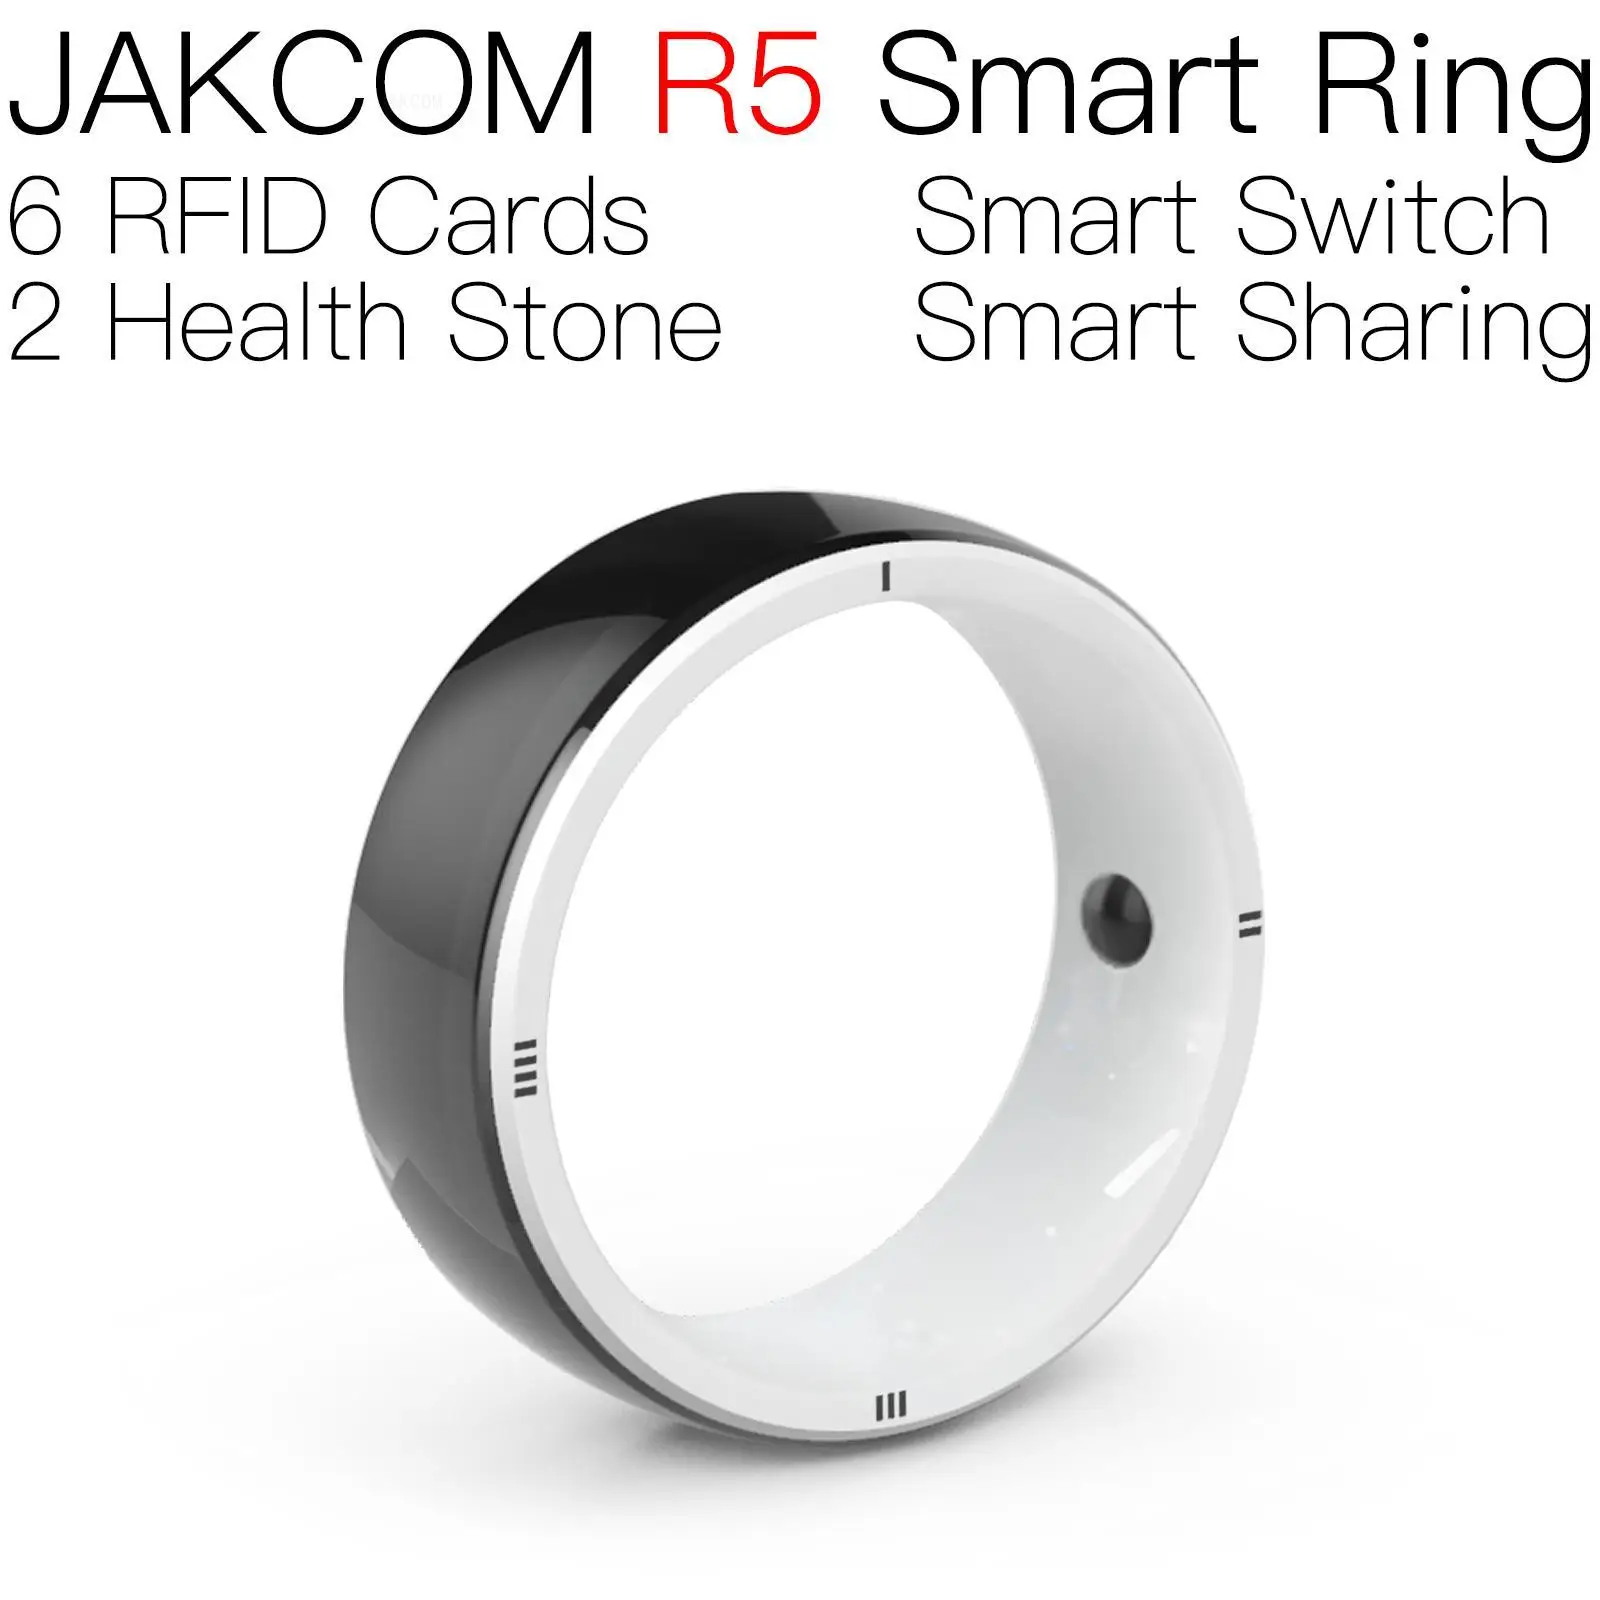 

JAKCOM R5 Smart Ring Match to key copy nfc tag write 72 piece crossing iot rfid block 125khz antenna mini chip husband x4